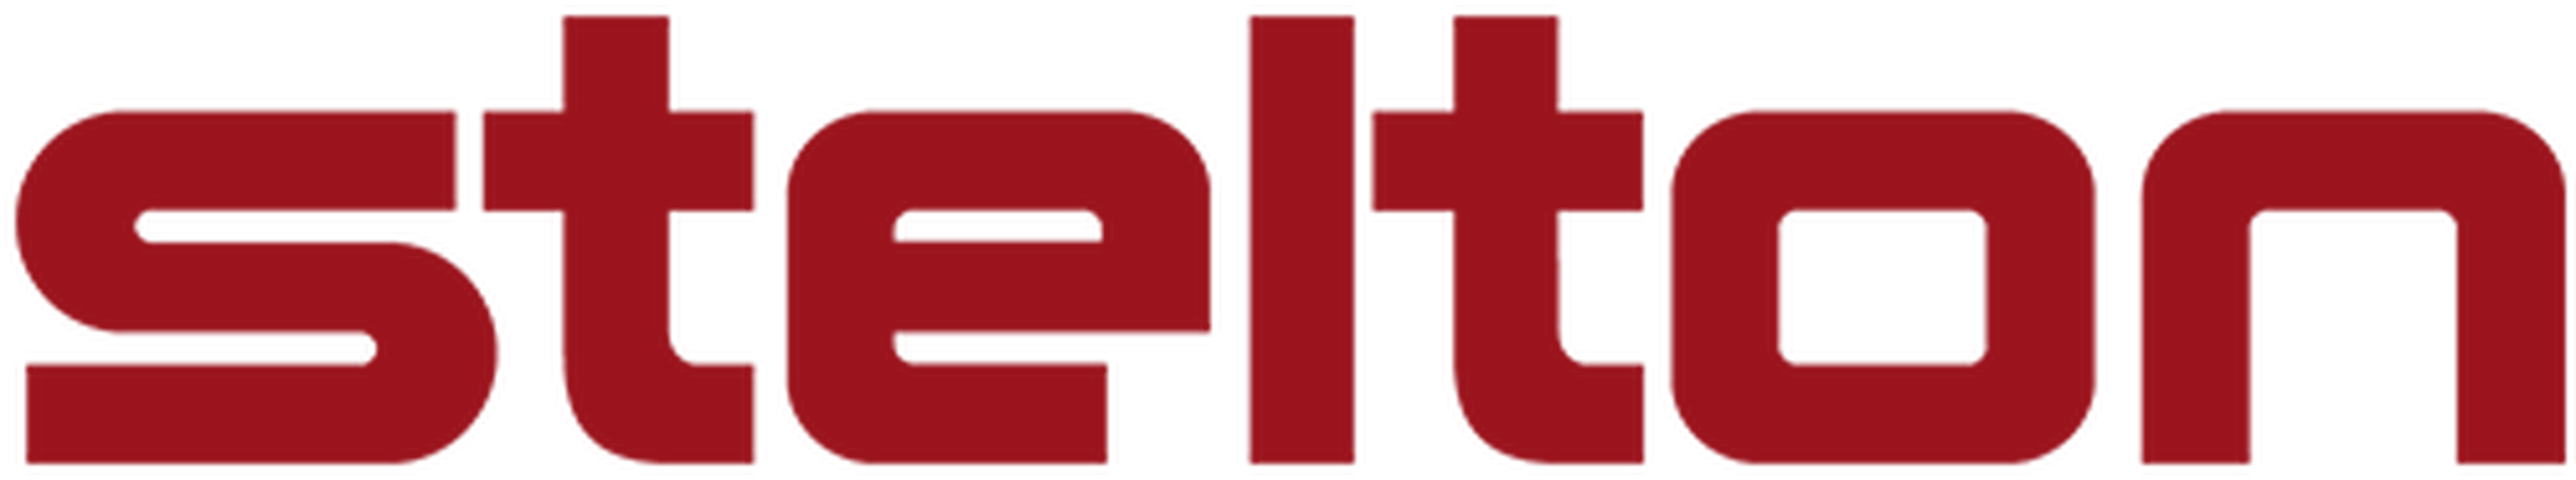 Stelton logotype